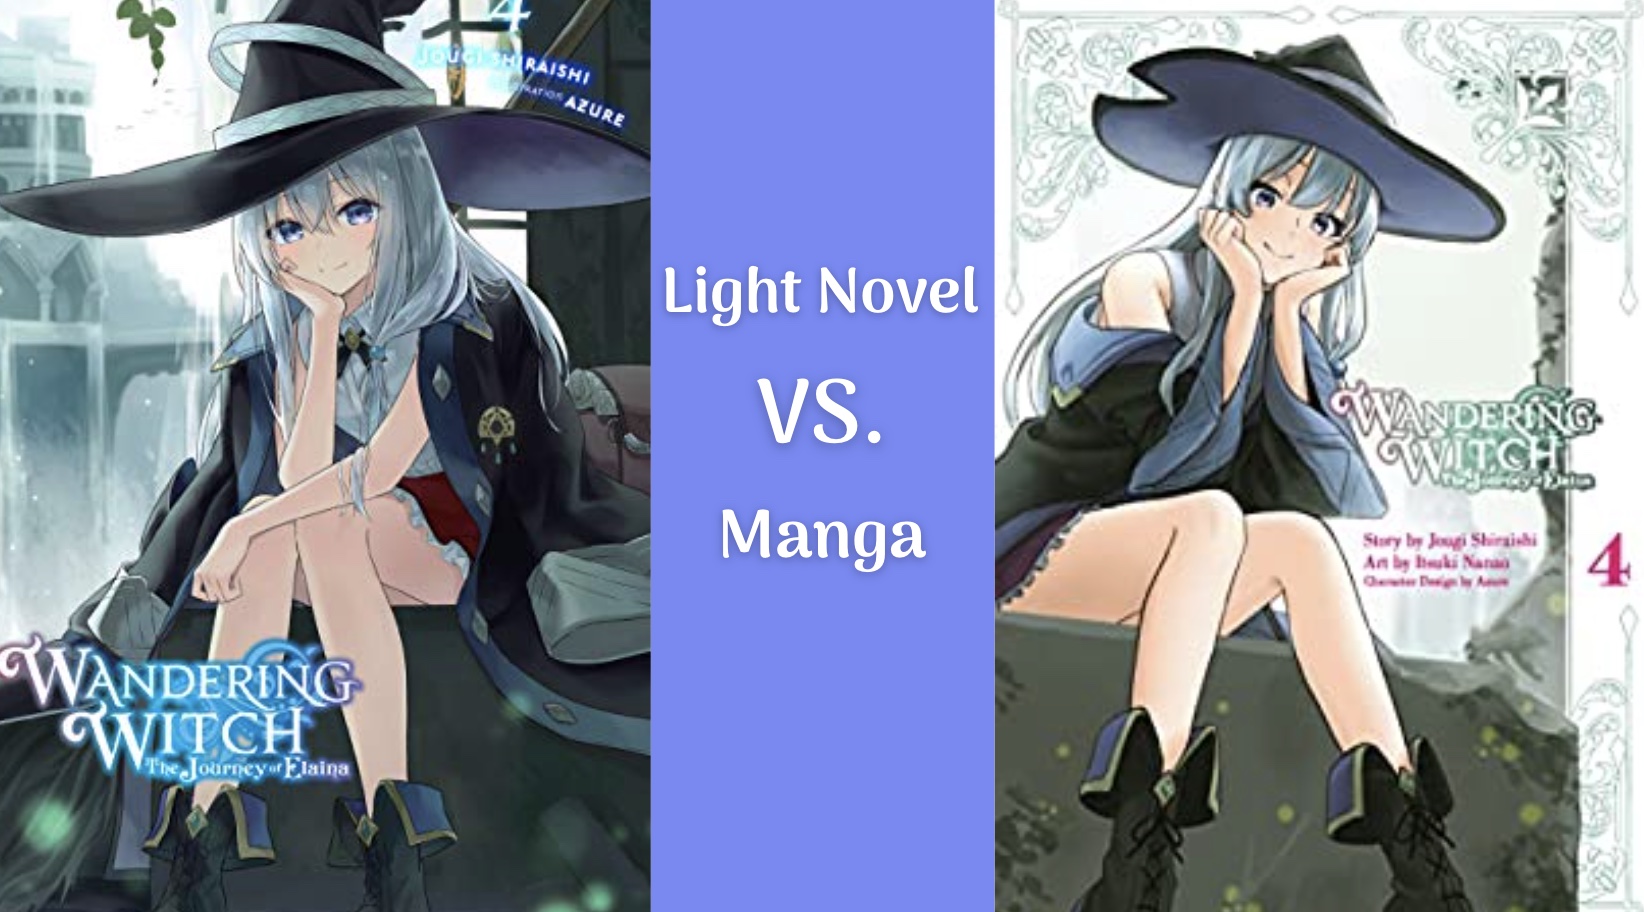 Wandering Witch, light novel vs manga